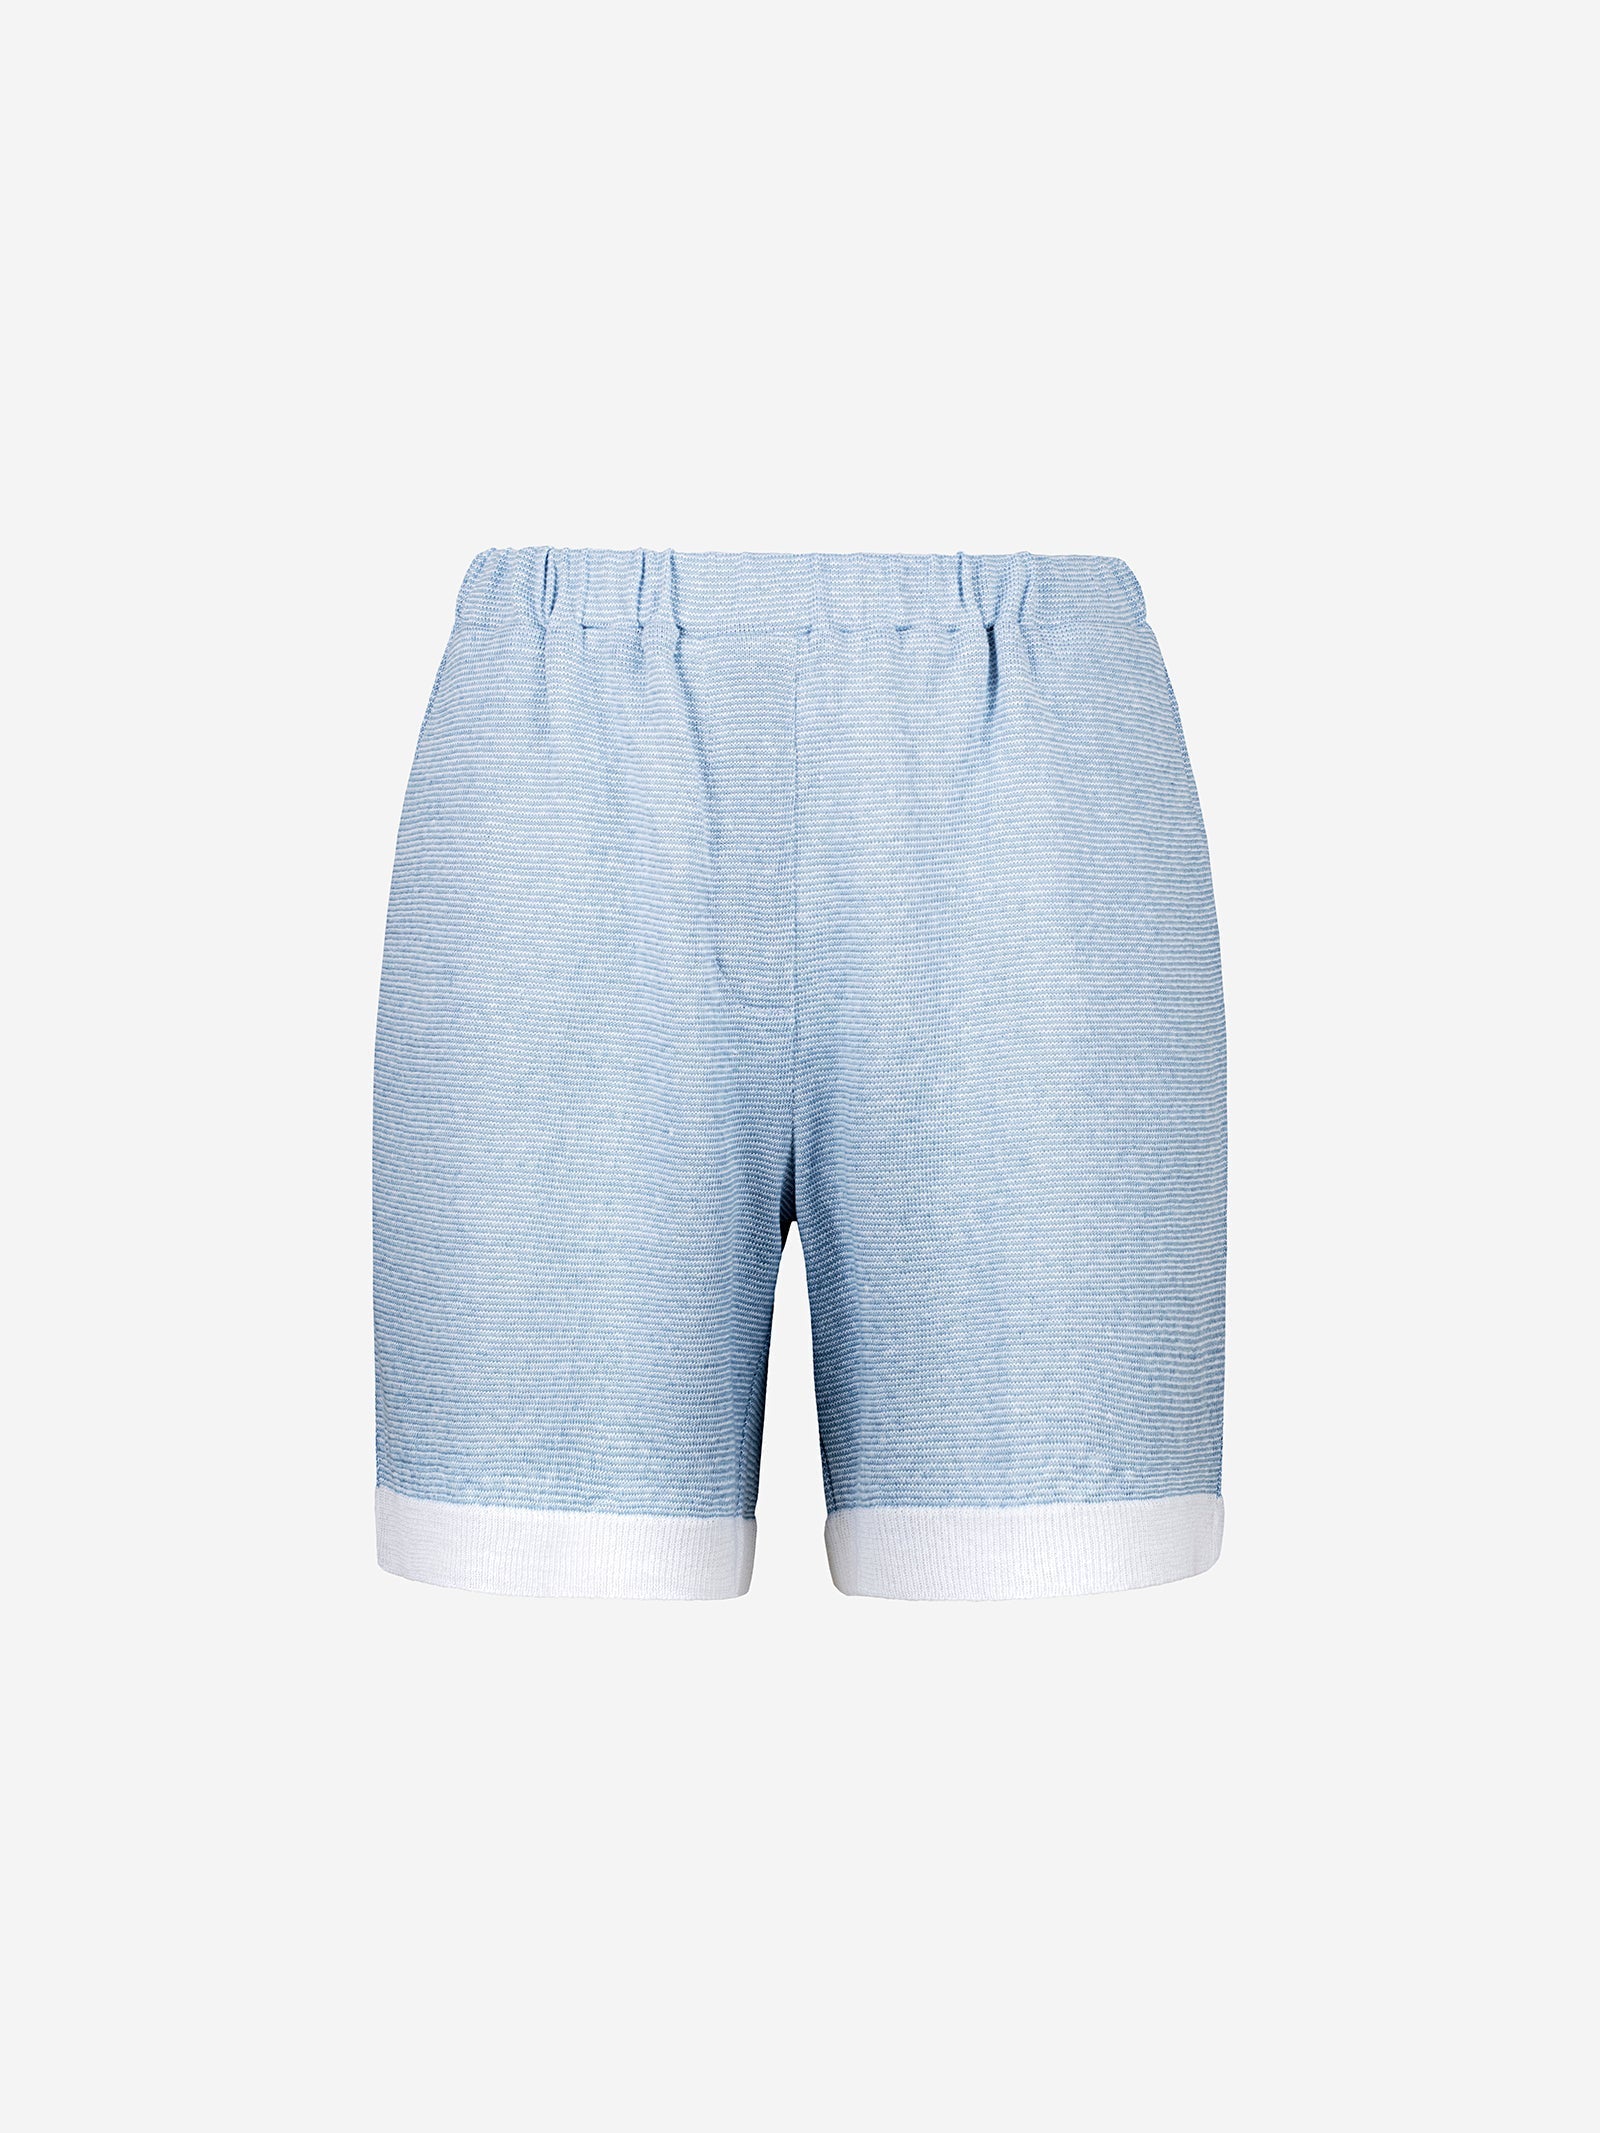 Short Brio 100% Capri blue and white linen short front